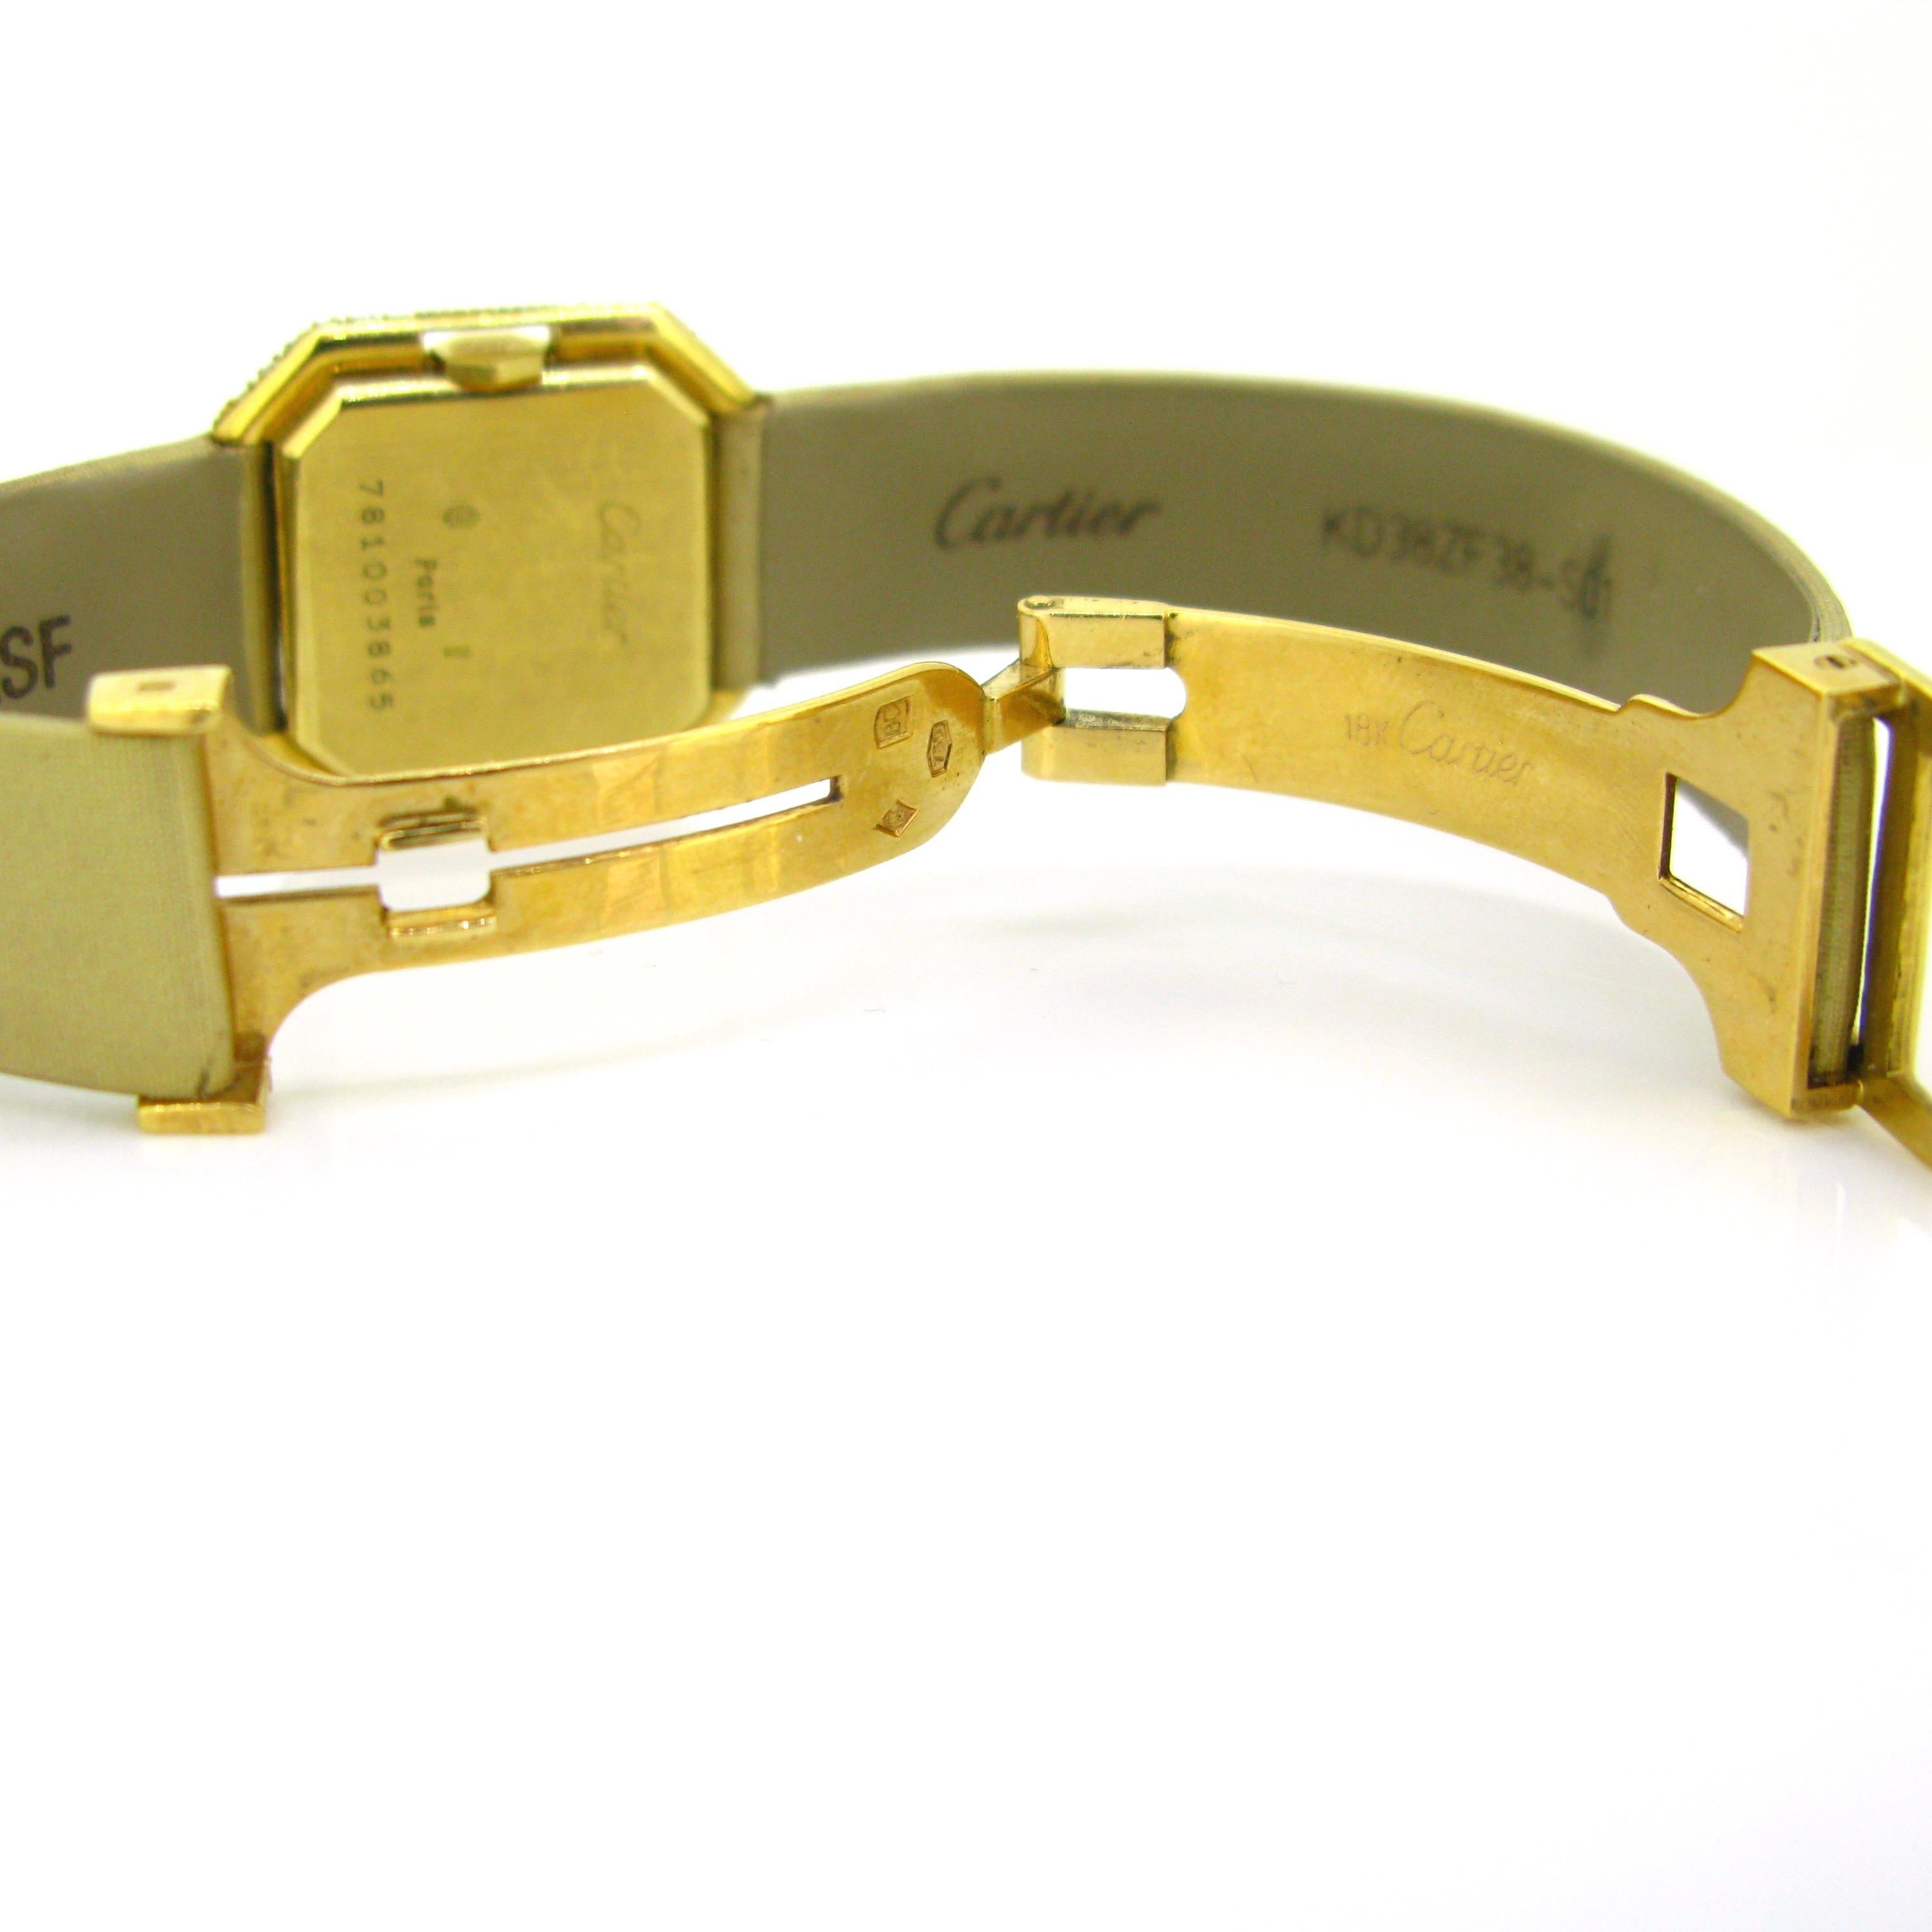 Cartier Ceinture Octagonal Diamonds Lady Manual Wind Yellow Gold Wristwatch 2